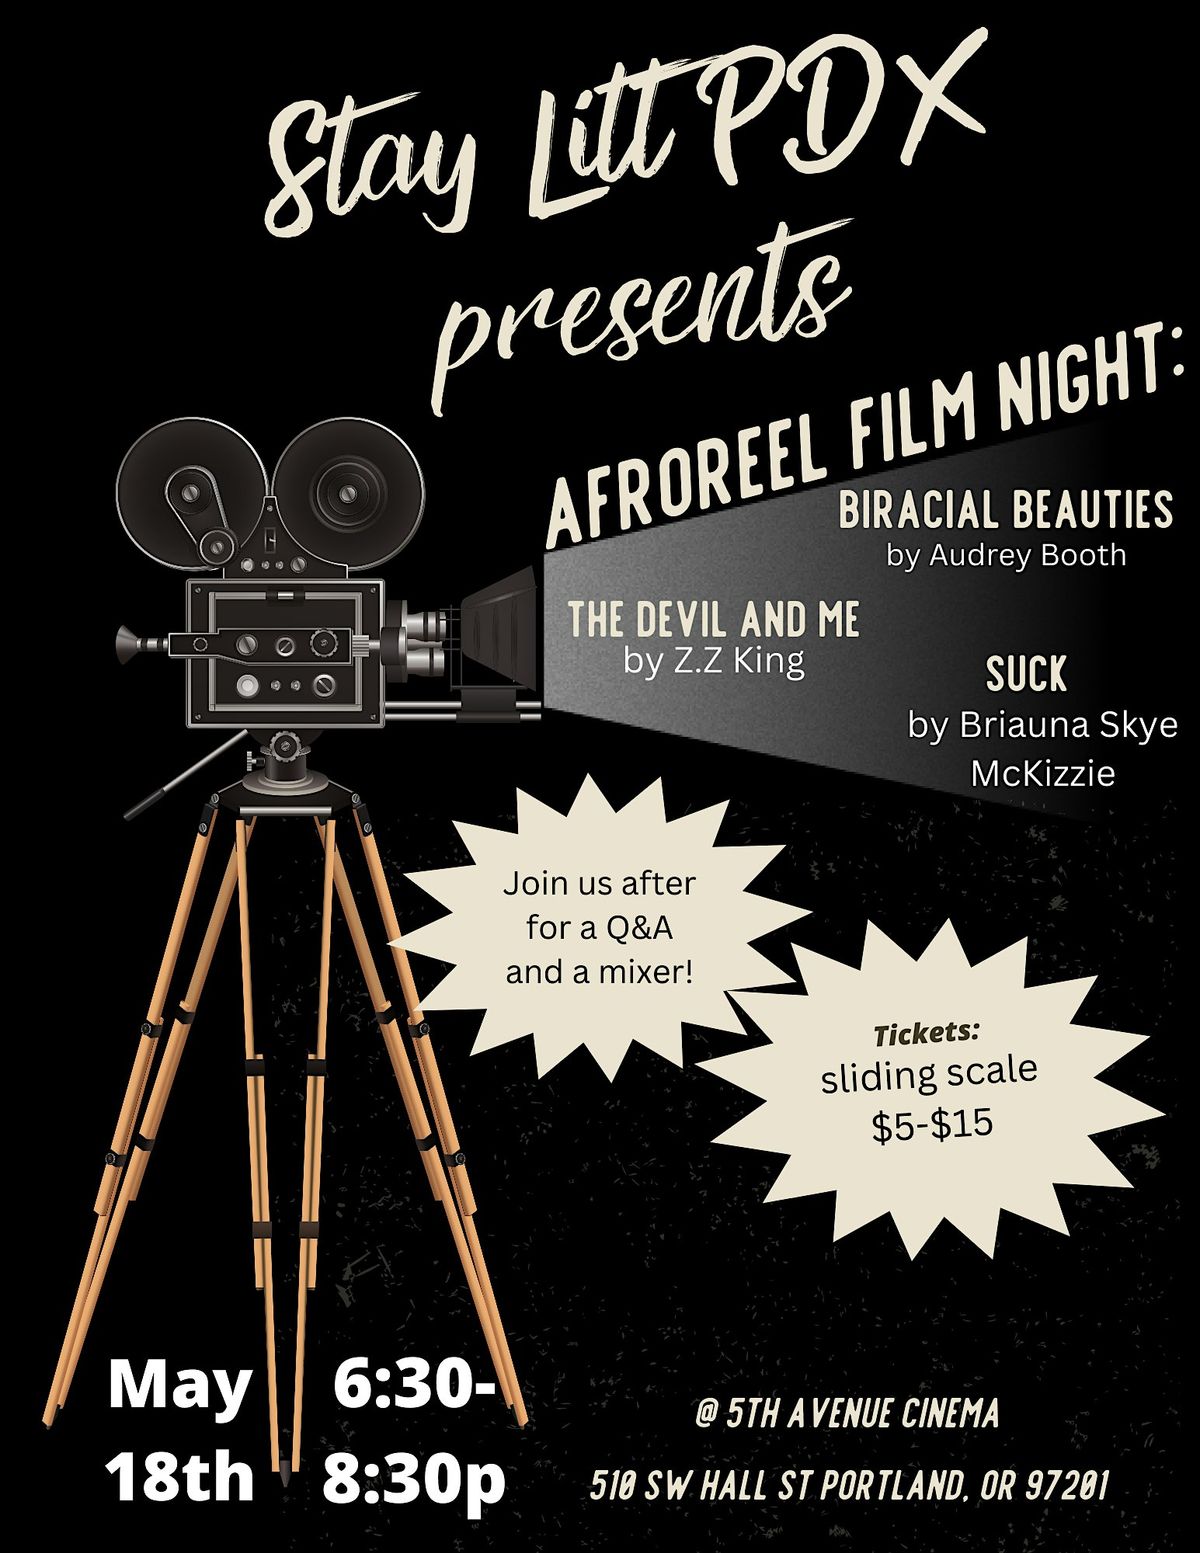 Stay Litt Presents AfroReel Film Night: Feat. Biracial Beauties